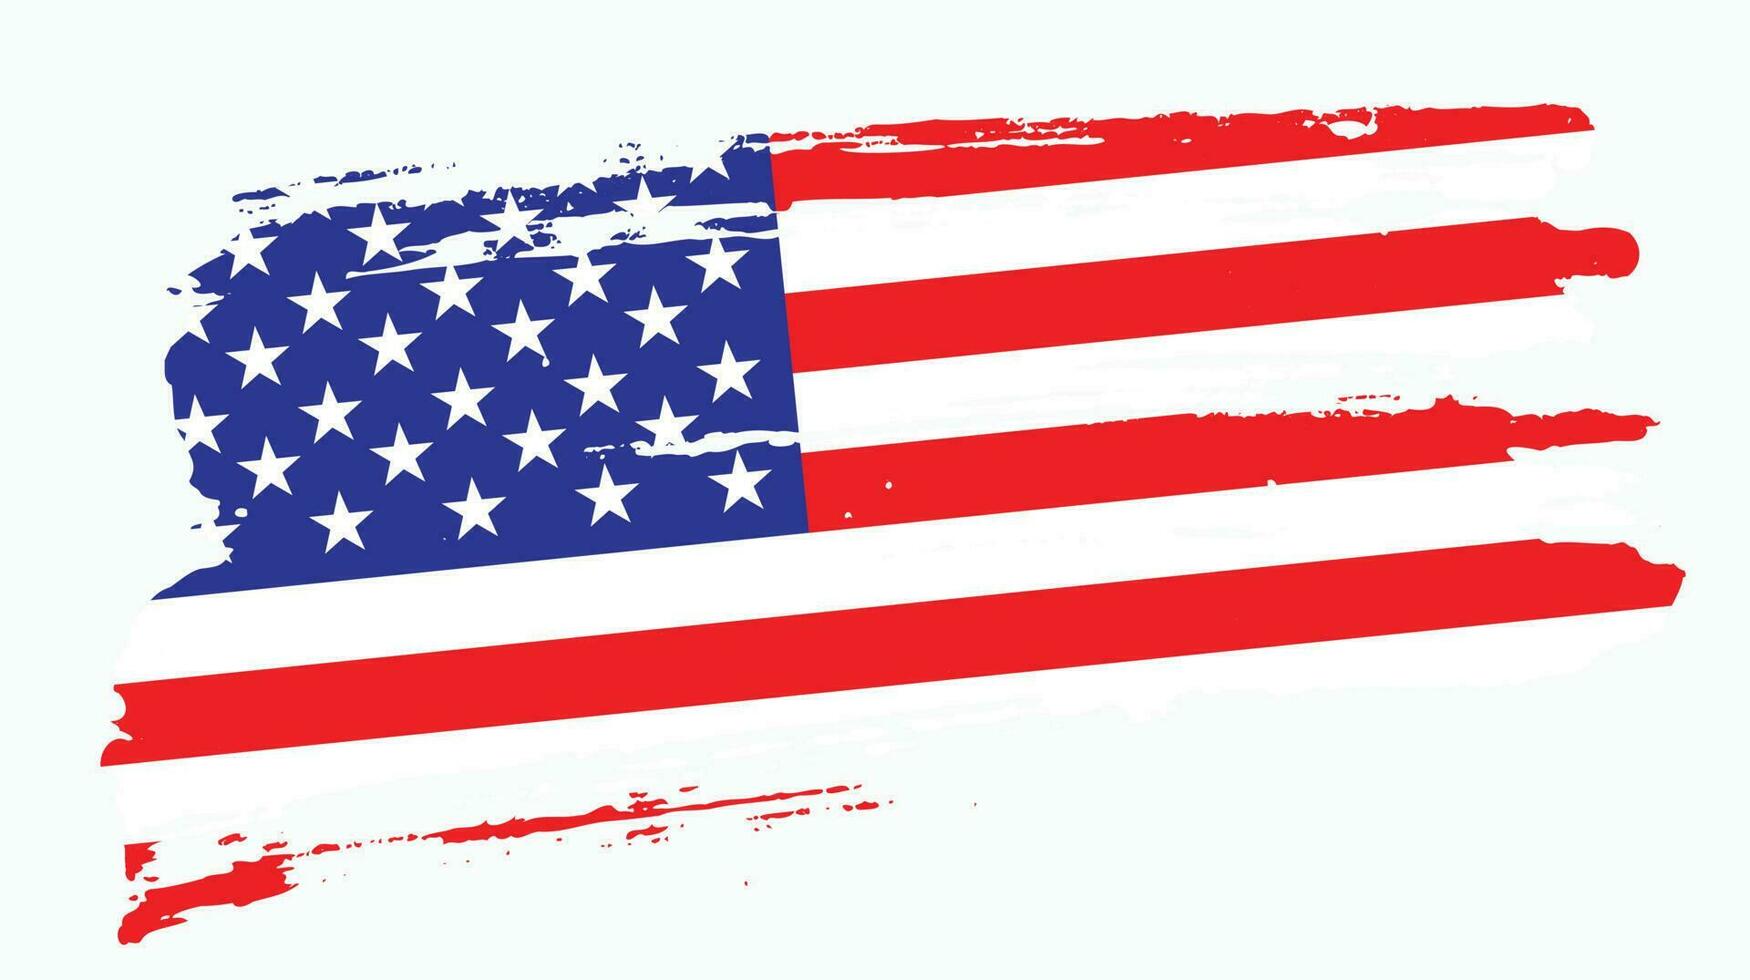 professionell hand måla USA flagga vektor